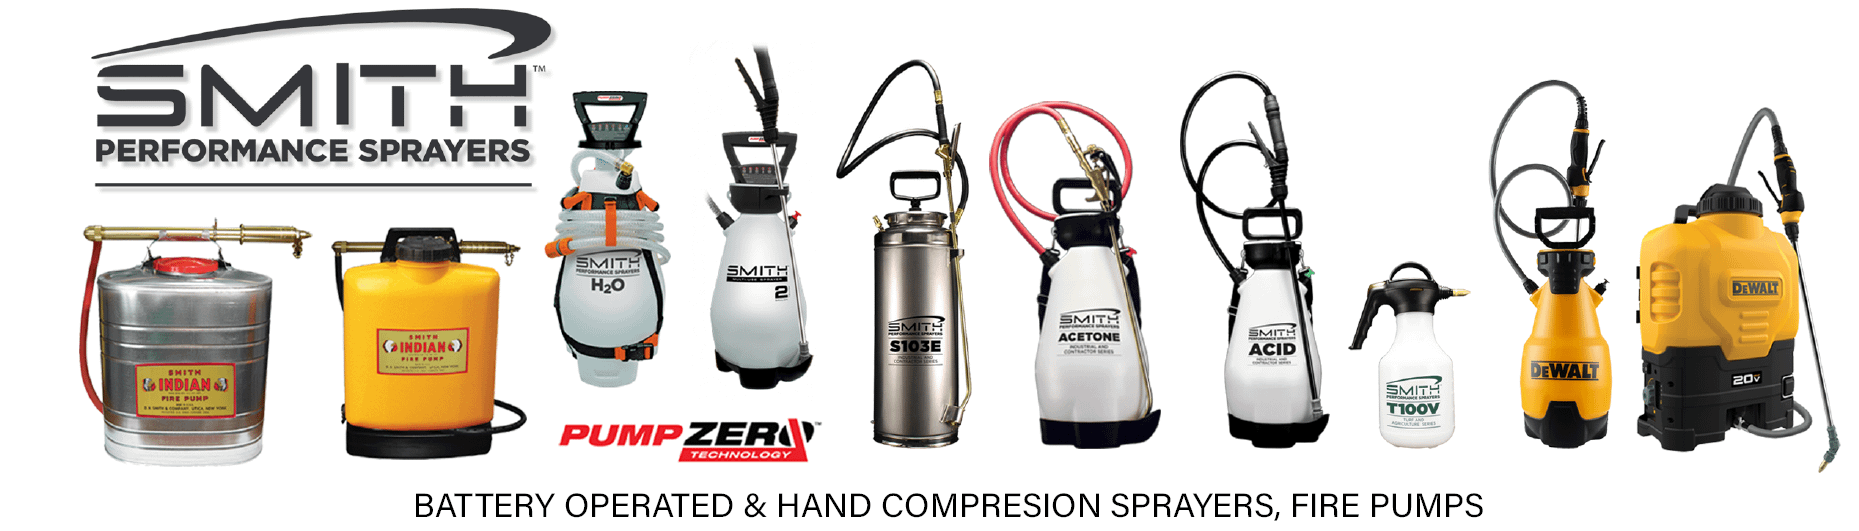 NACH Marketing - Smith Sprayers - Battery Operated & Hand Compression Sprayers, Fire Pumps